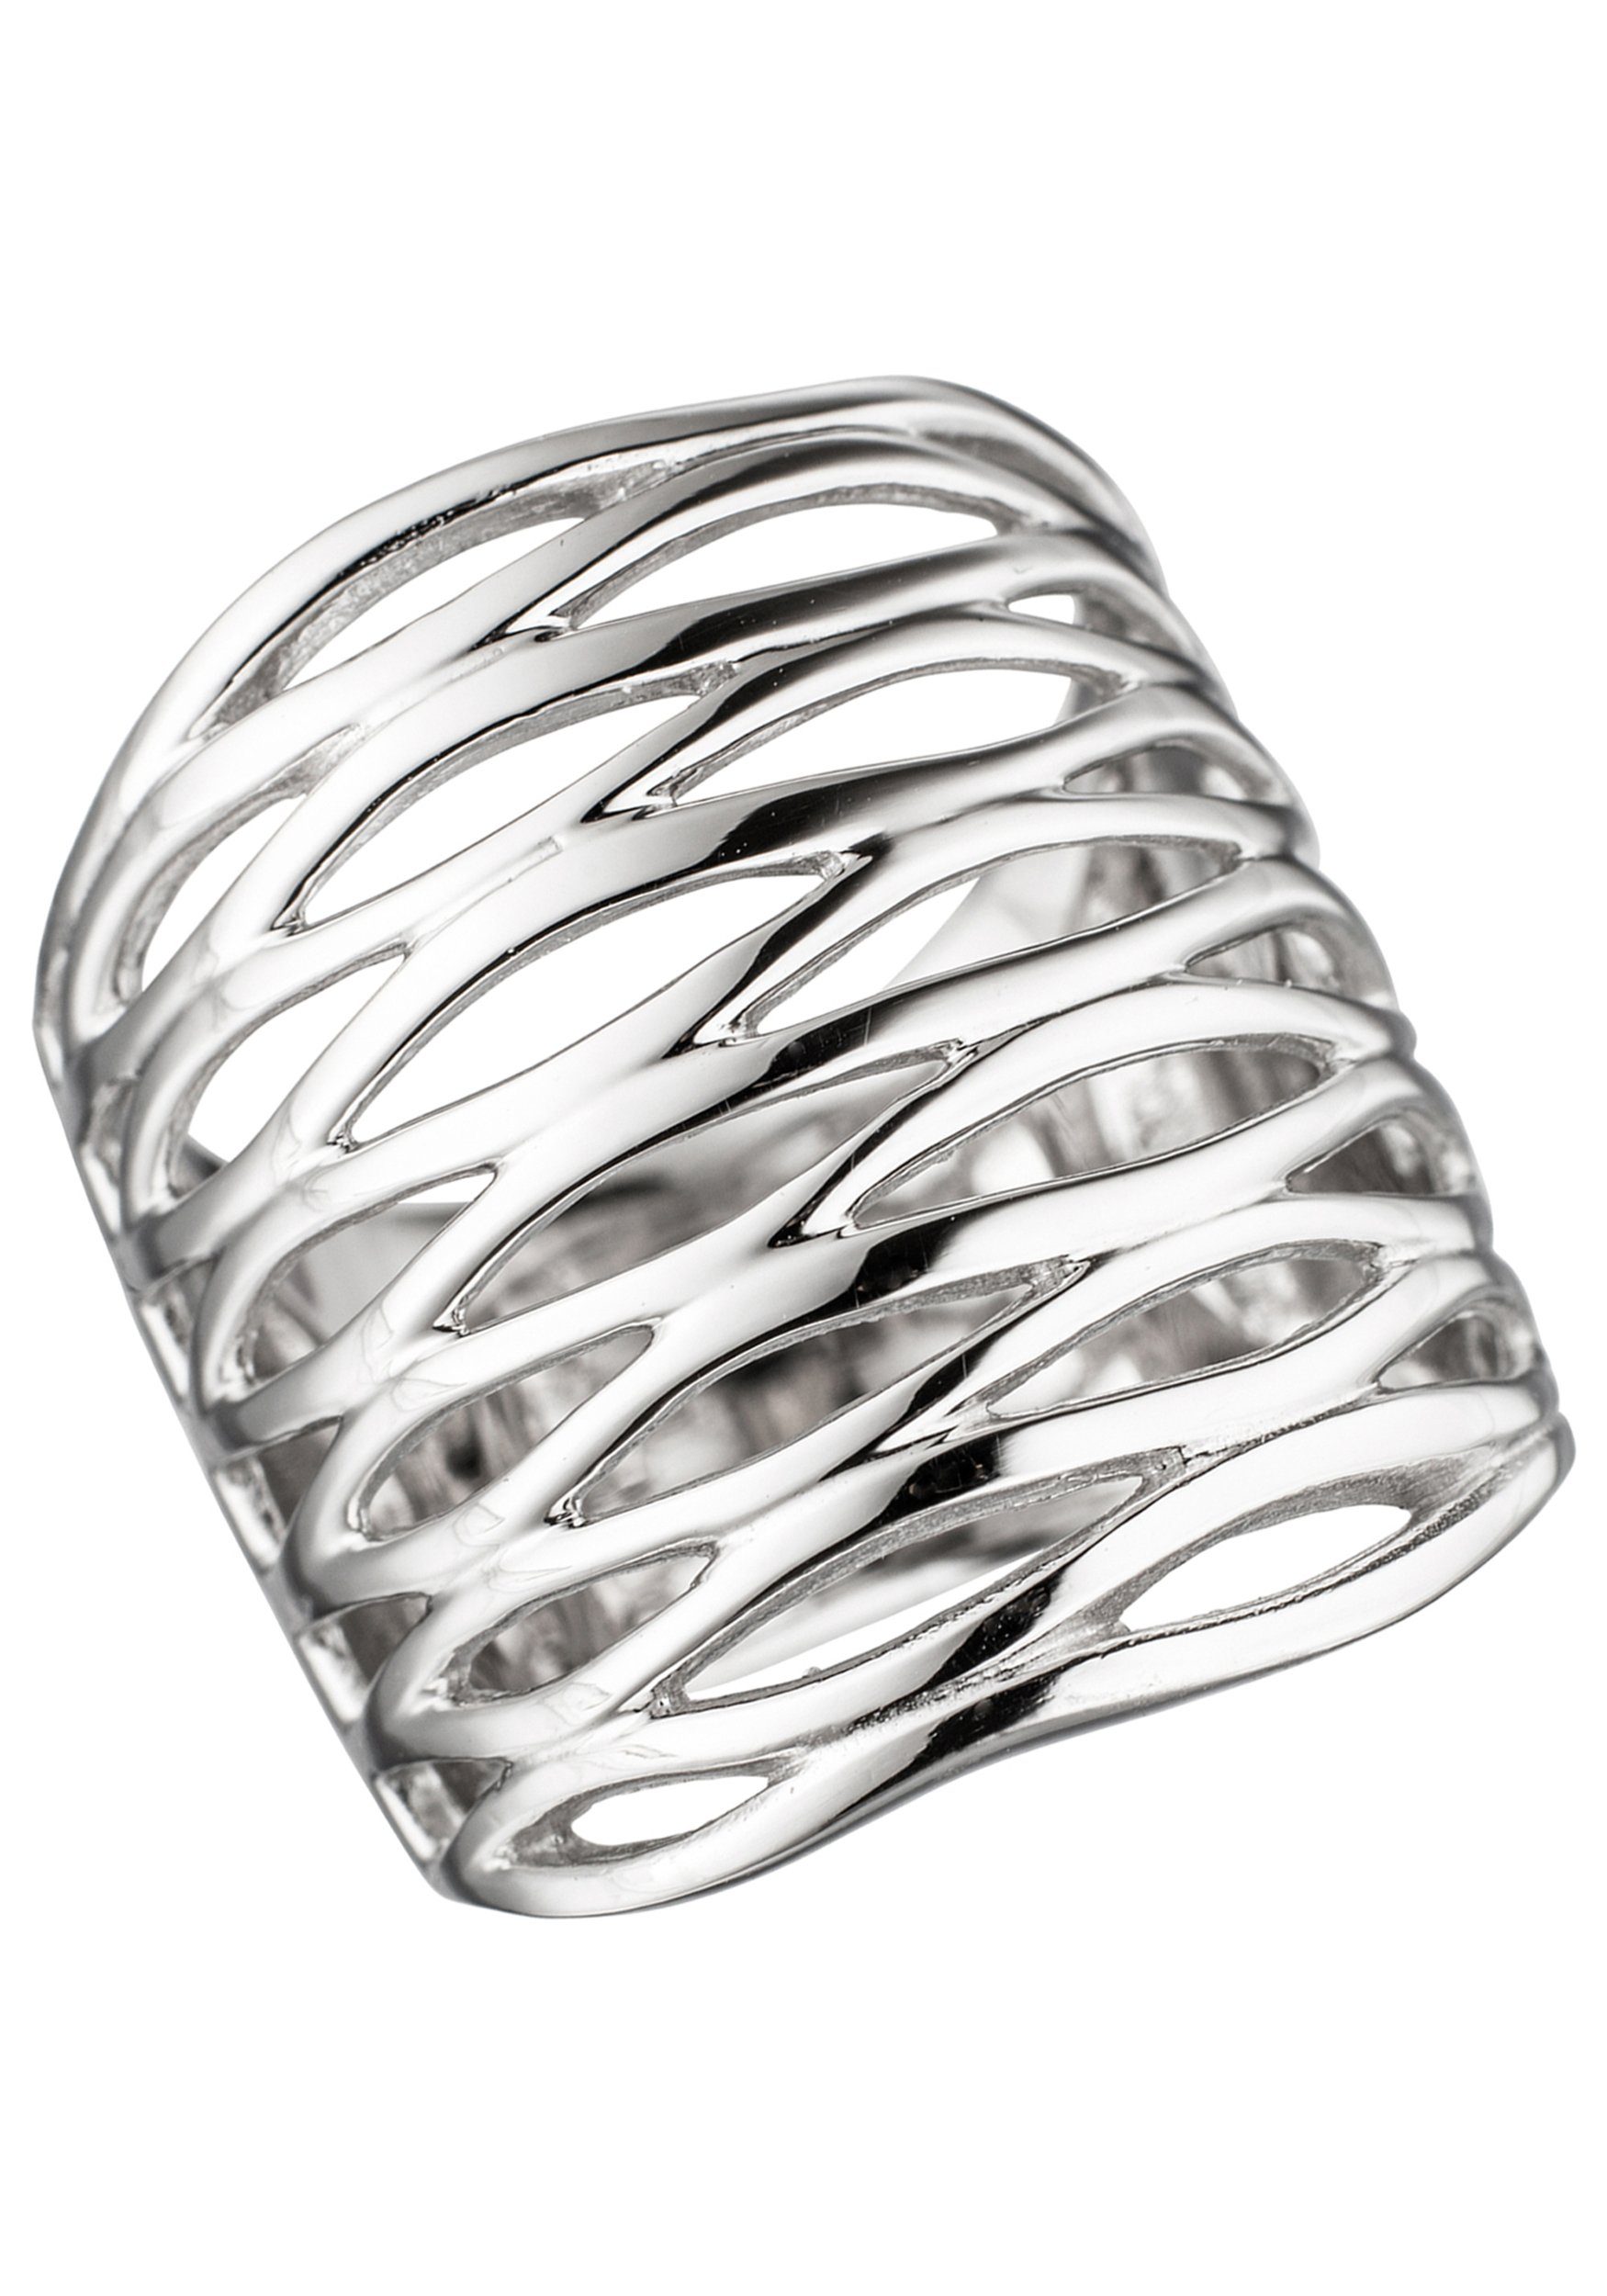 JOBO Silberring, breit 925 Silber, Hochwertiger breiter Ring